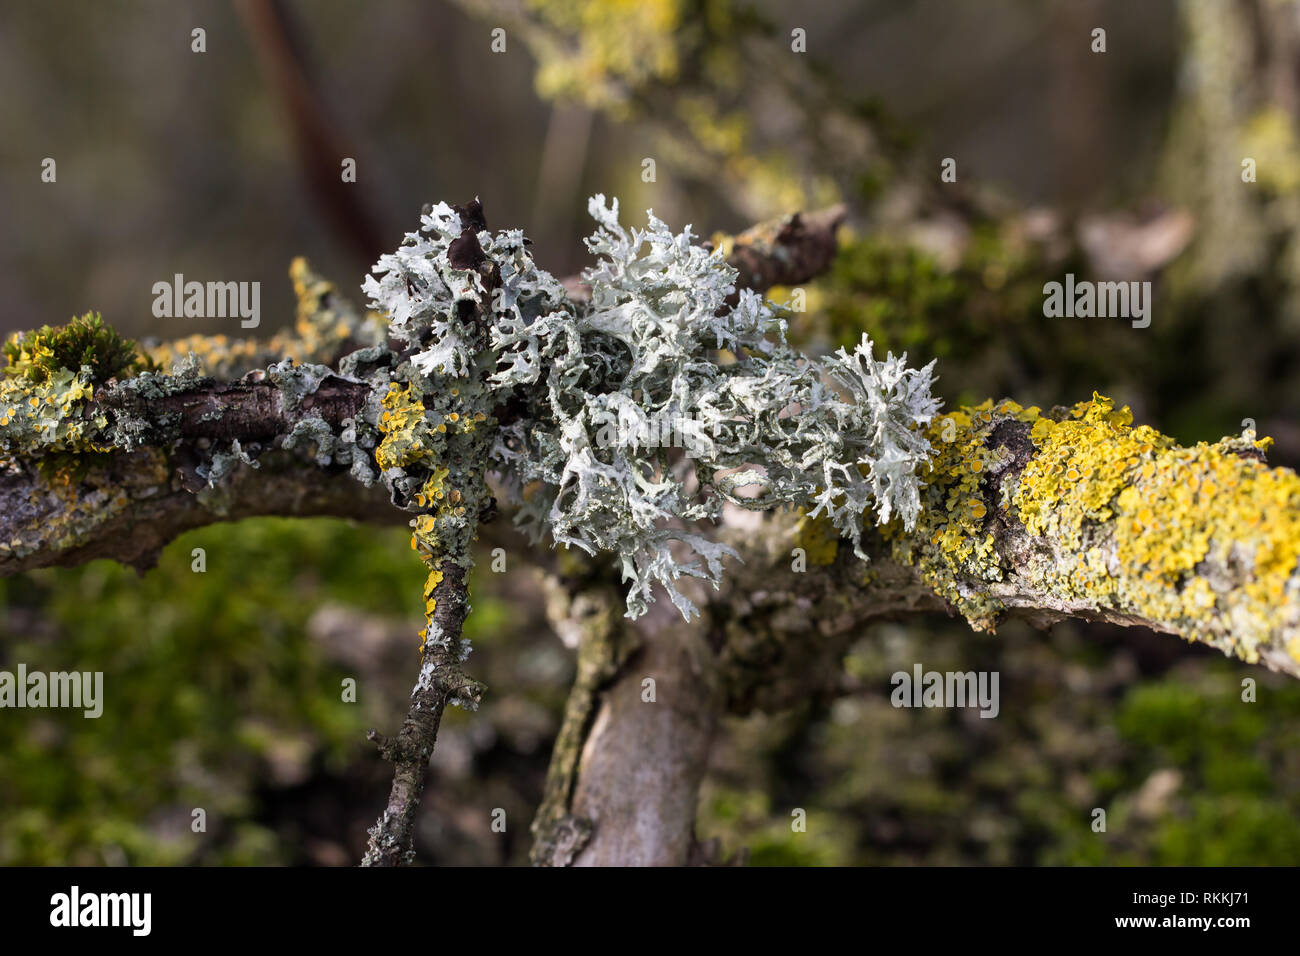 Lichen / Lichen growing on the tree. Stock Photo